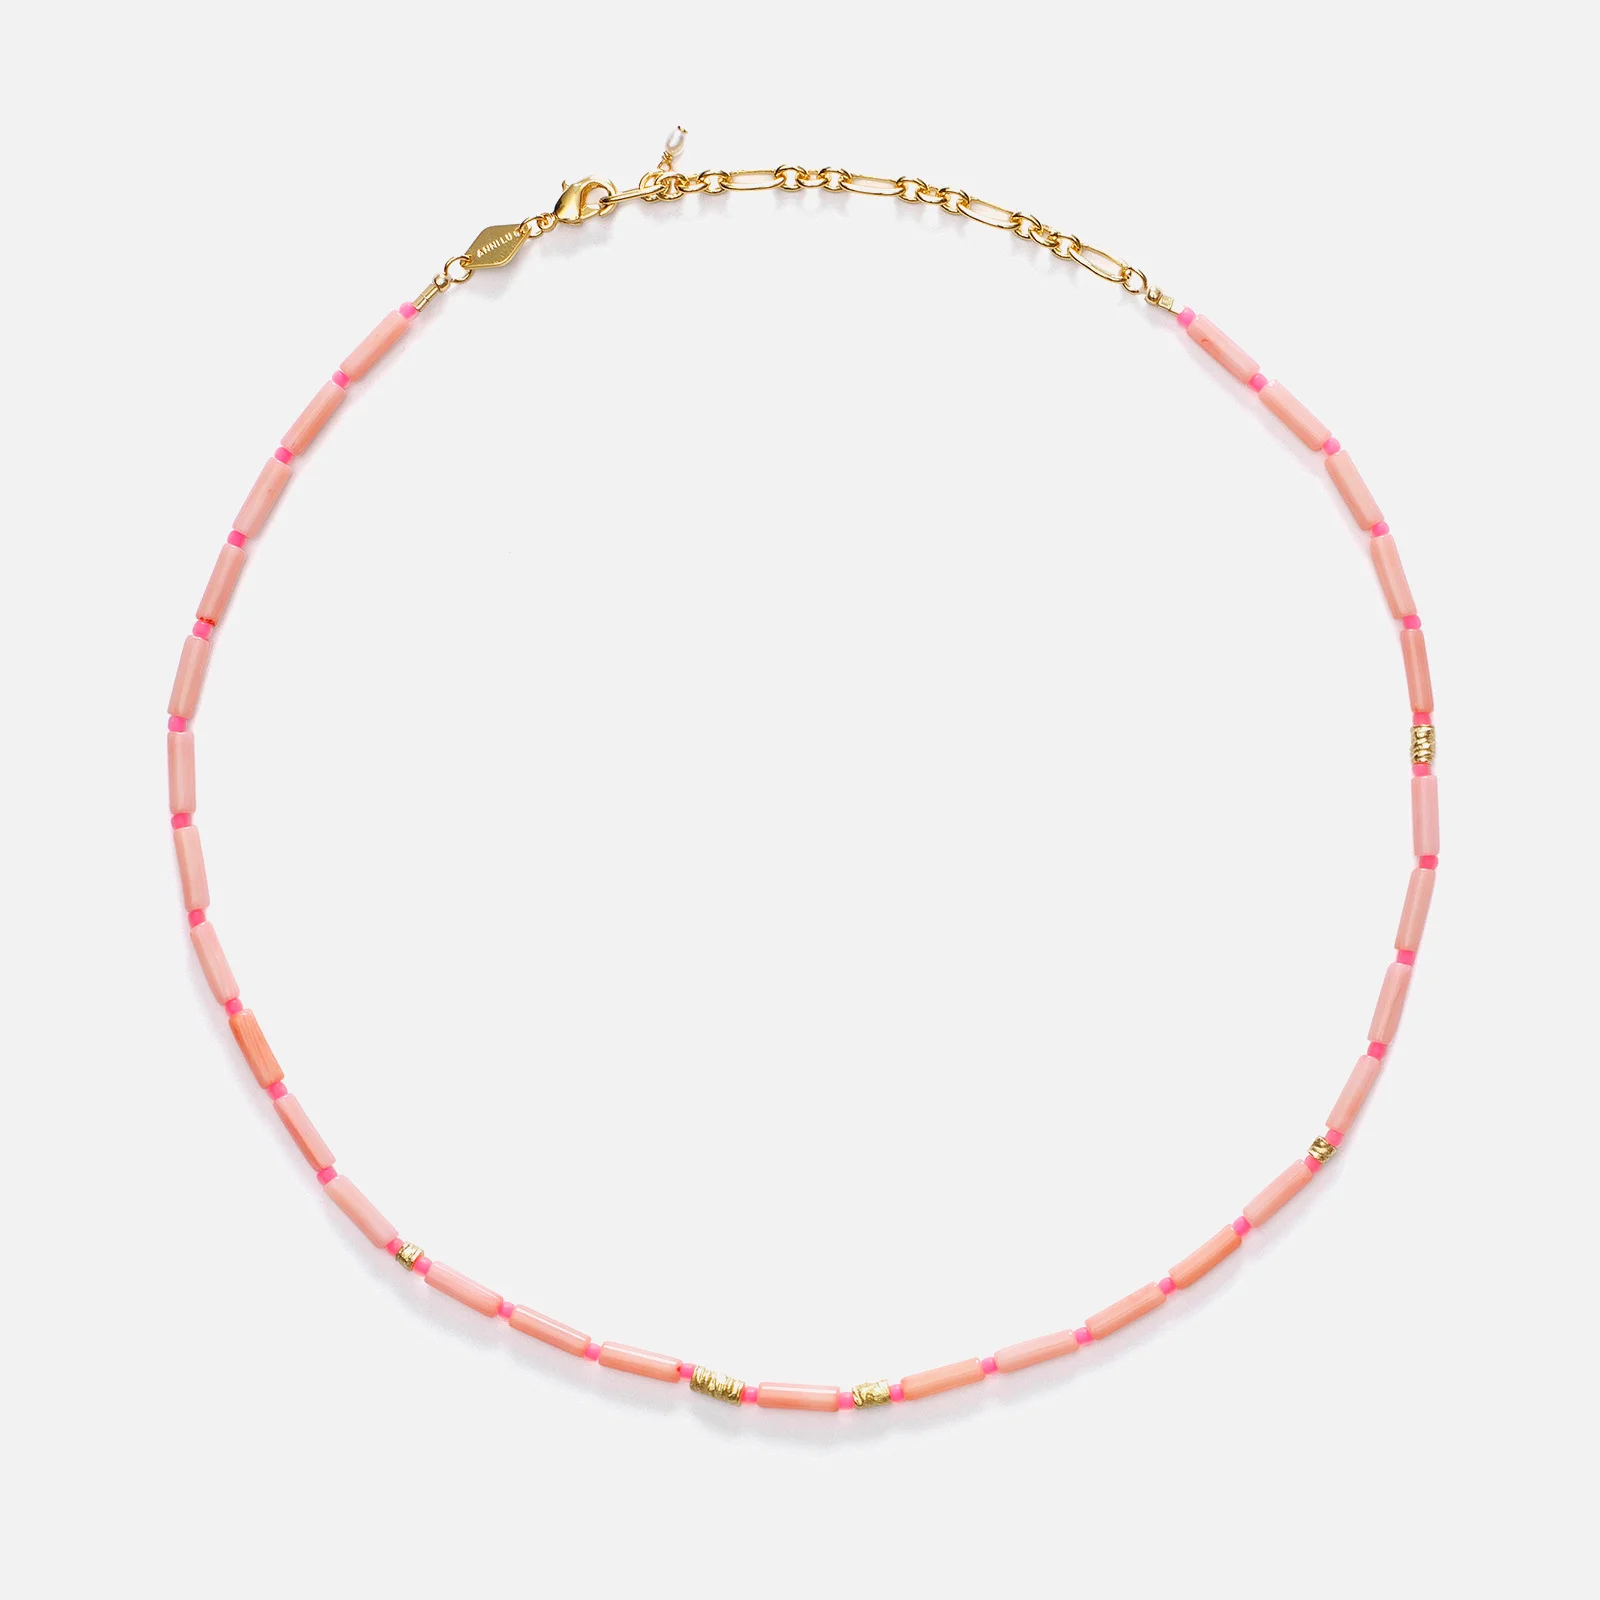 Anni Lu Women's Malibu Necklace - Pink-a-Boo Image 1